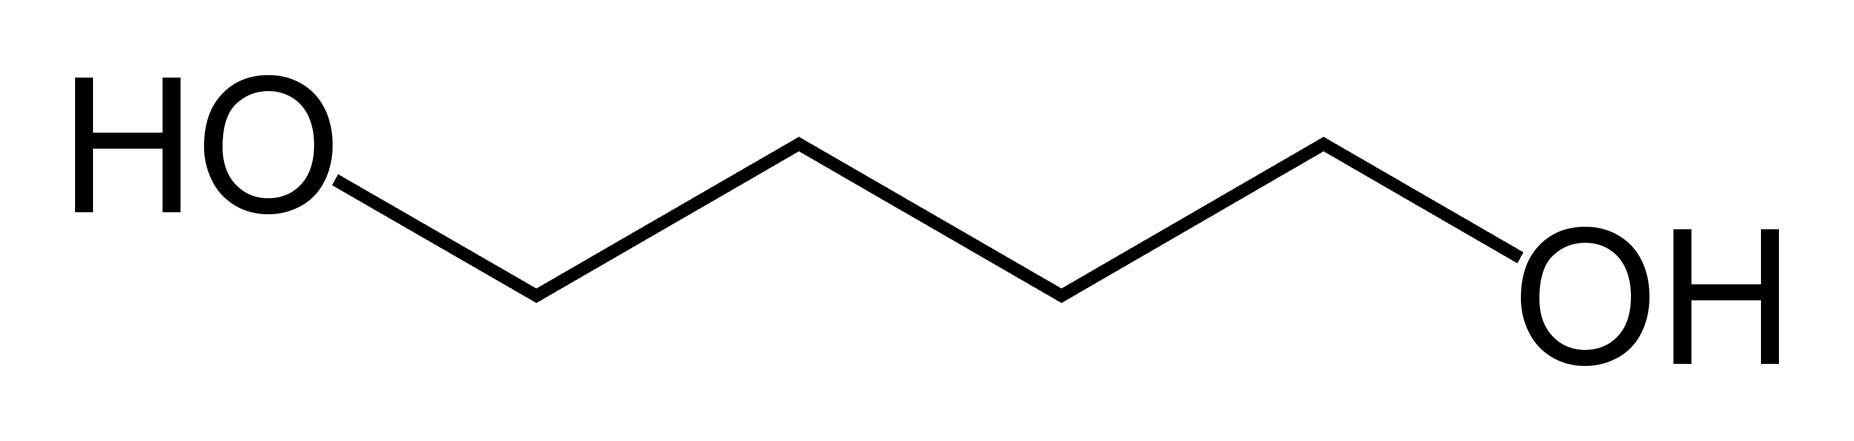 1,4-butanediol.png